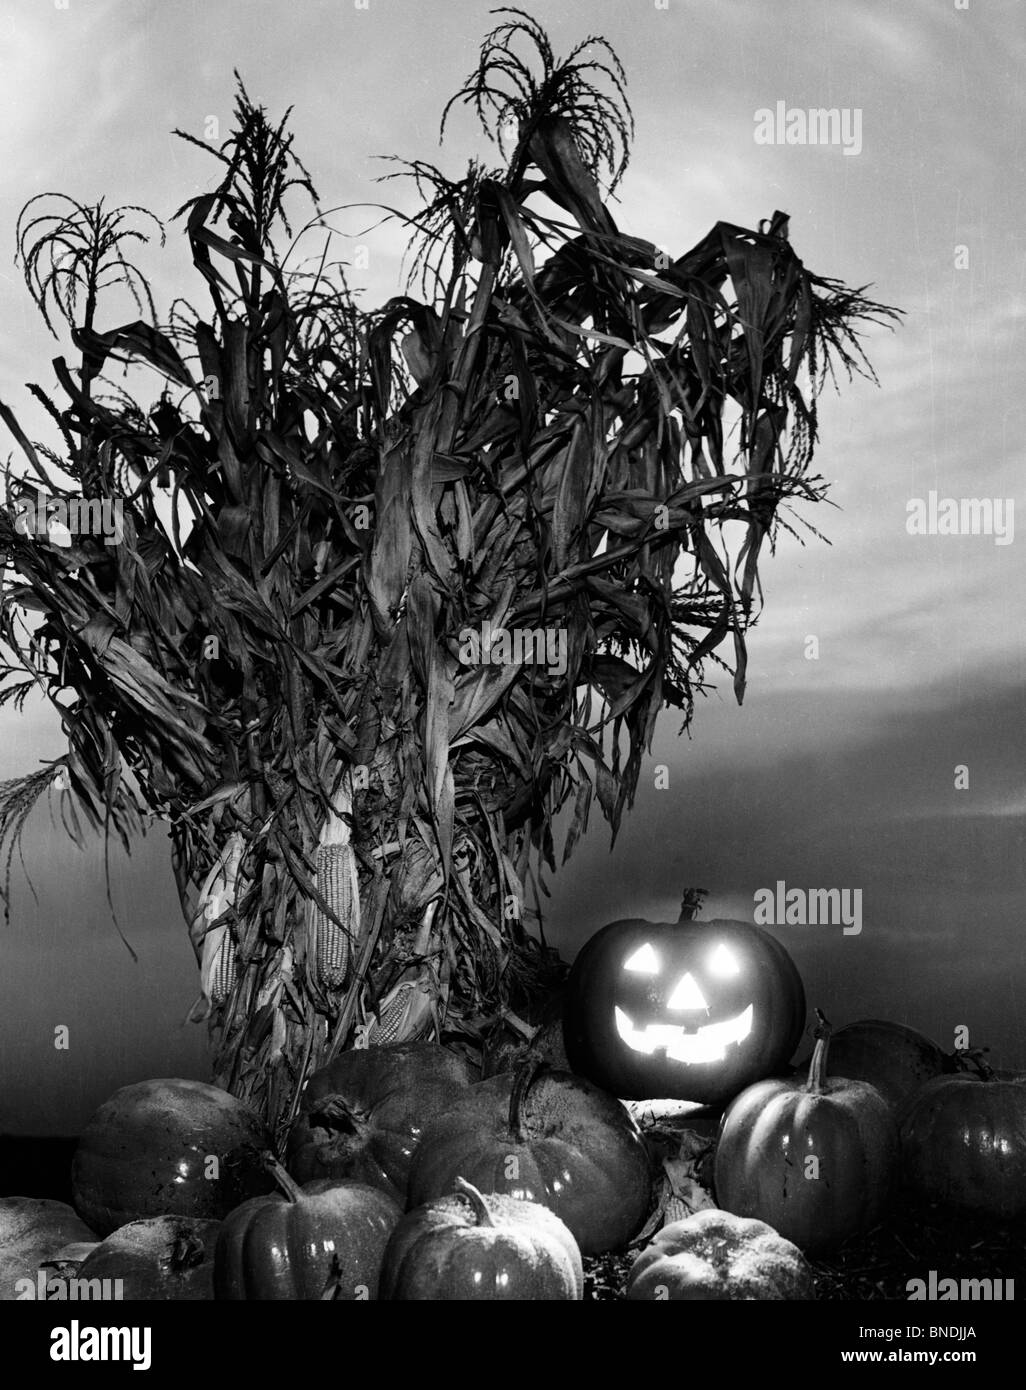 Illuminated jack o' lantern with pumpkins and corn stalks Stock Photo